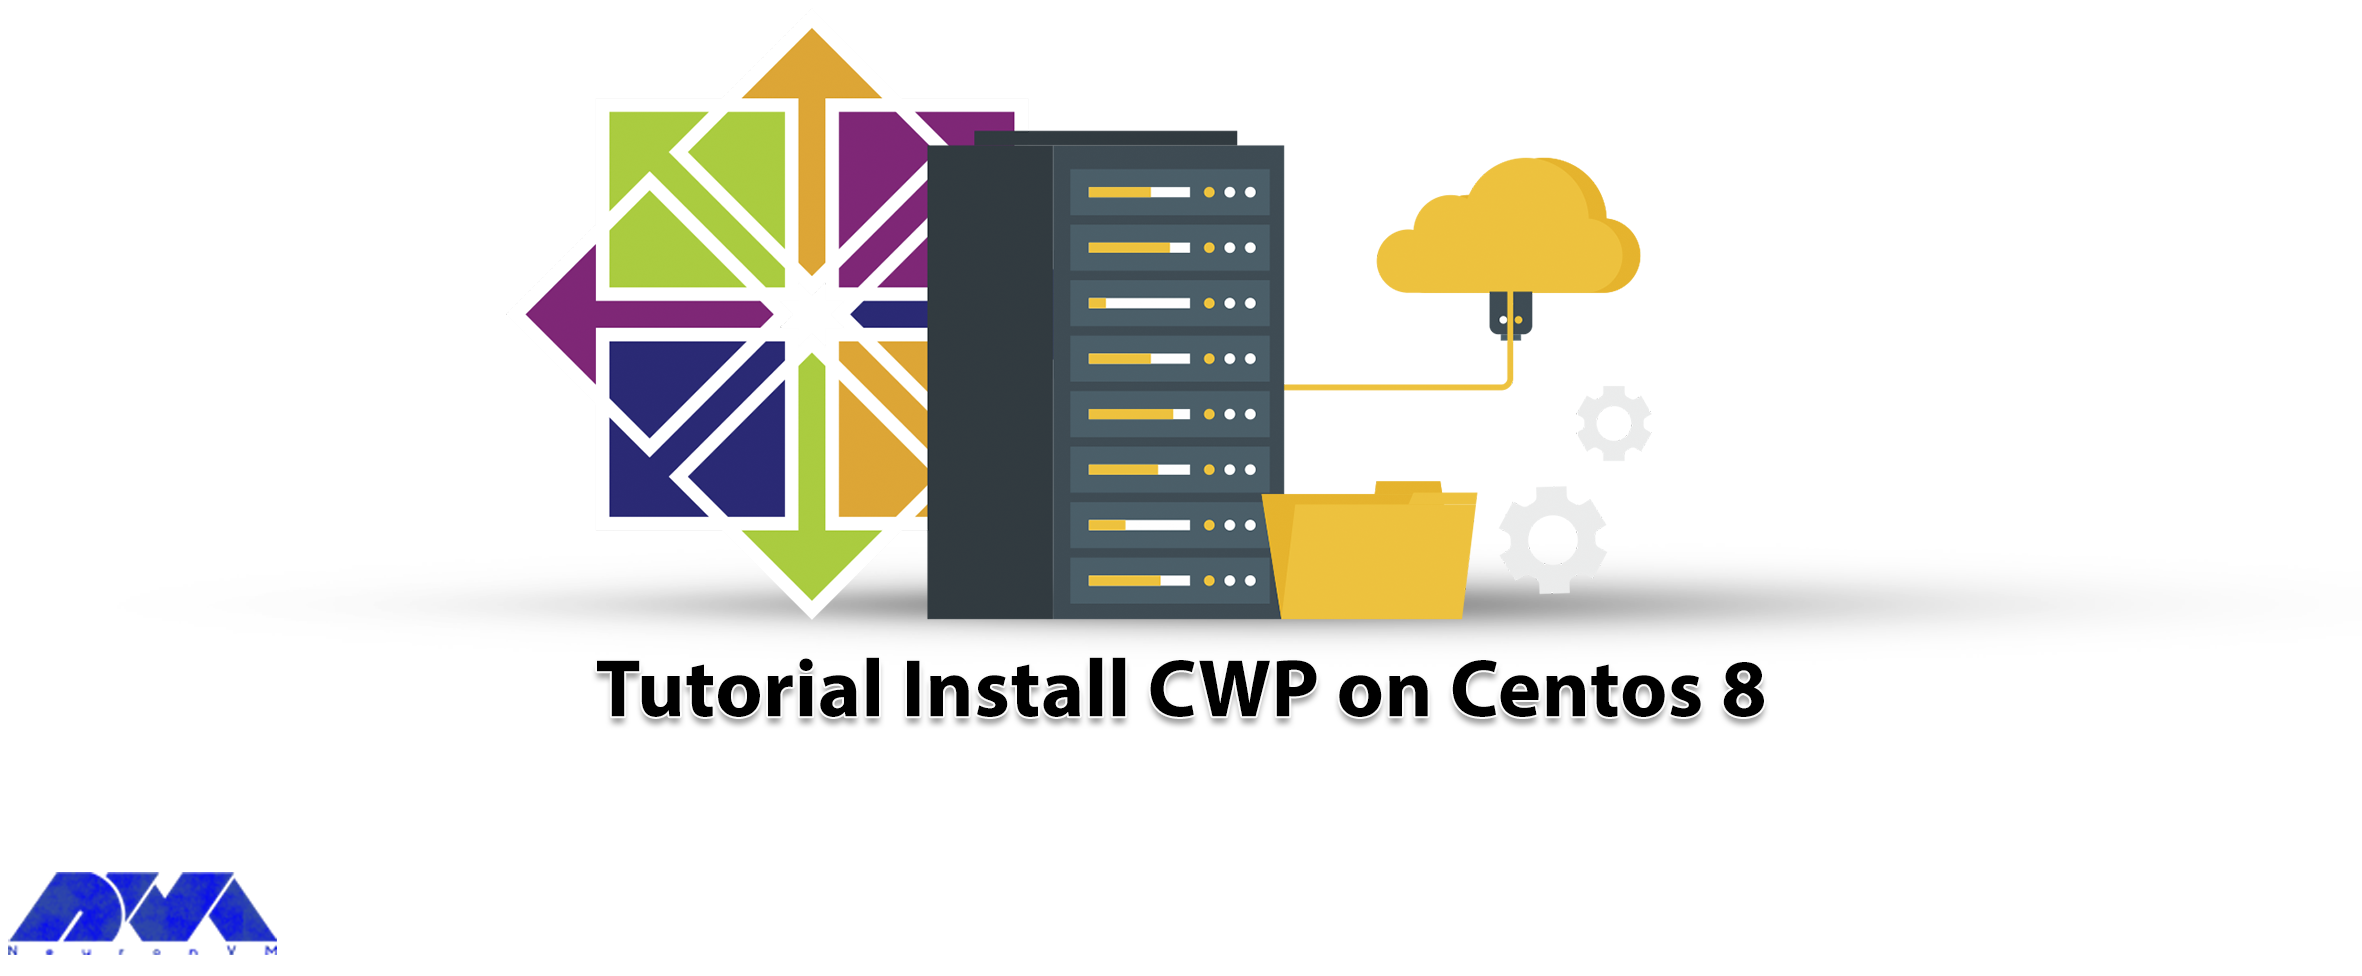 Tutorial Install CWP on Centos 8 - NeuronVM